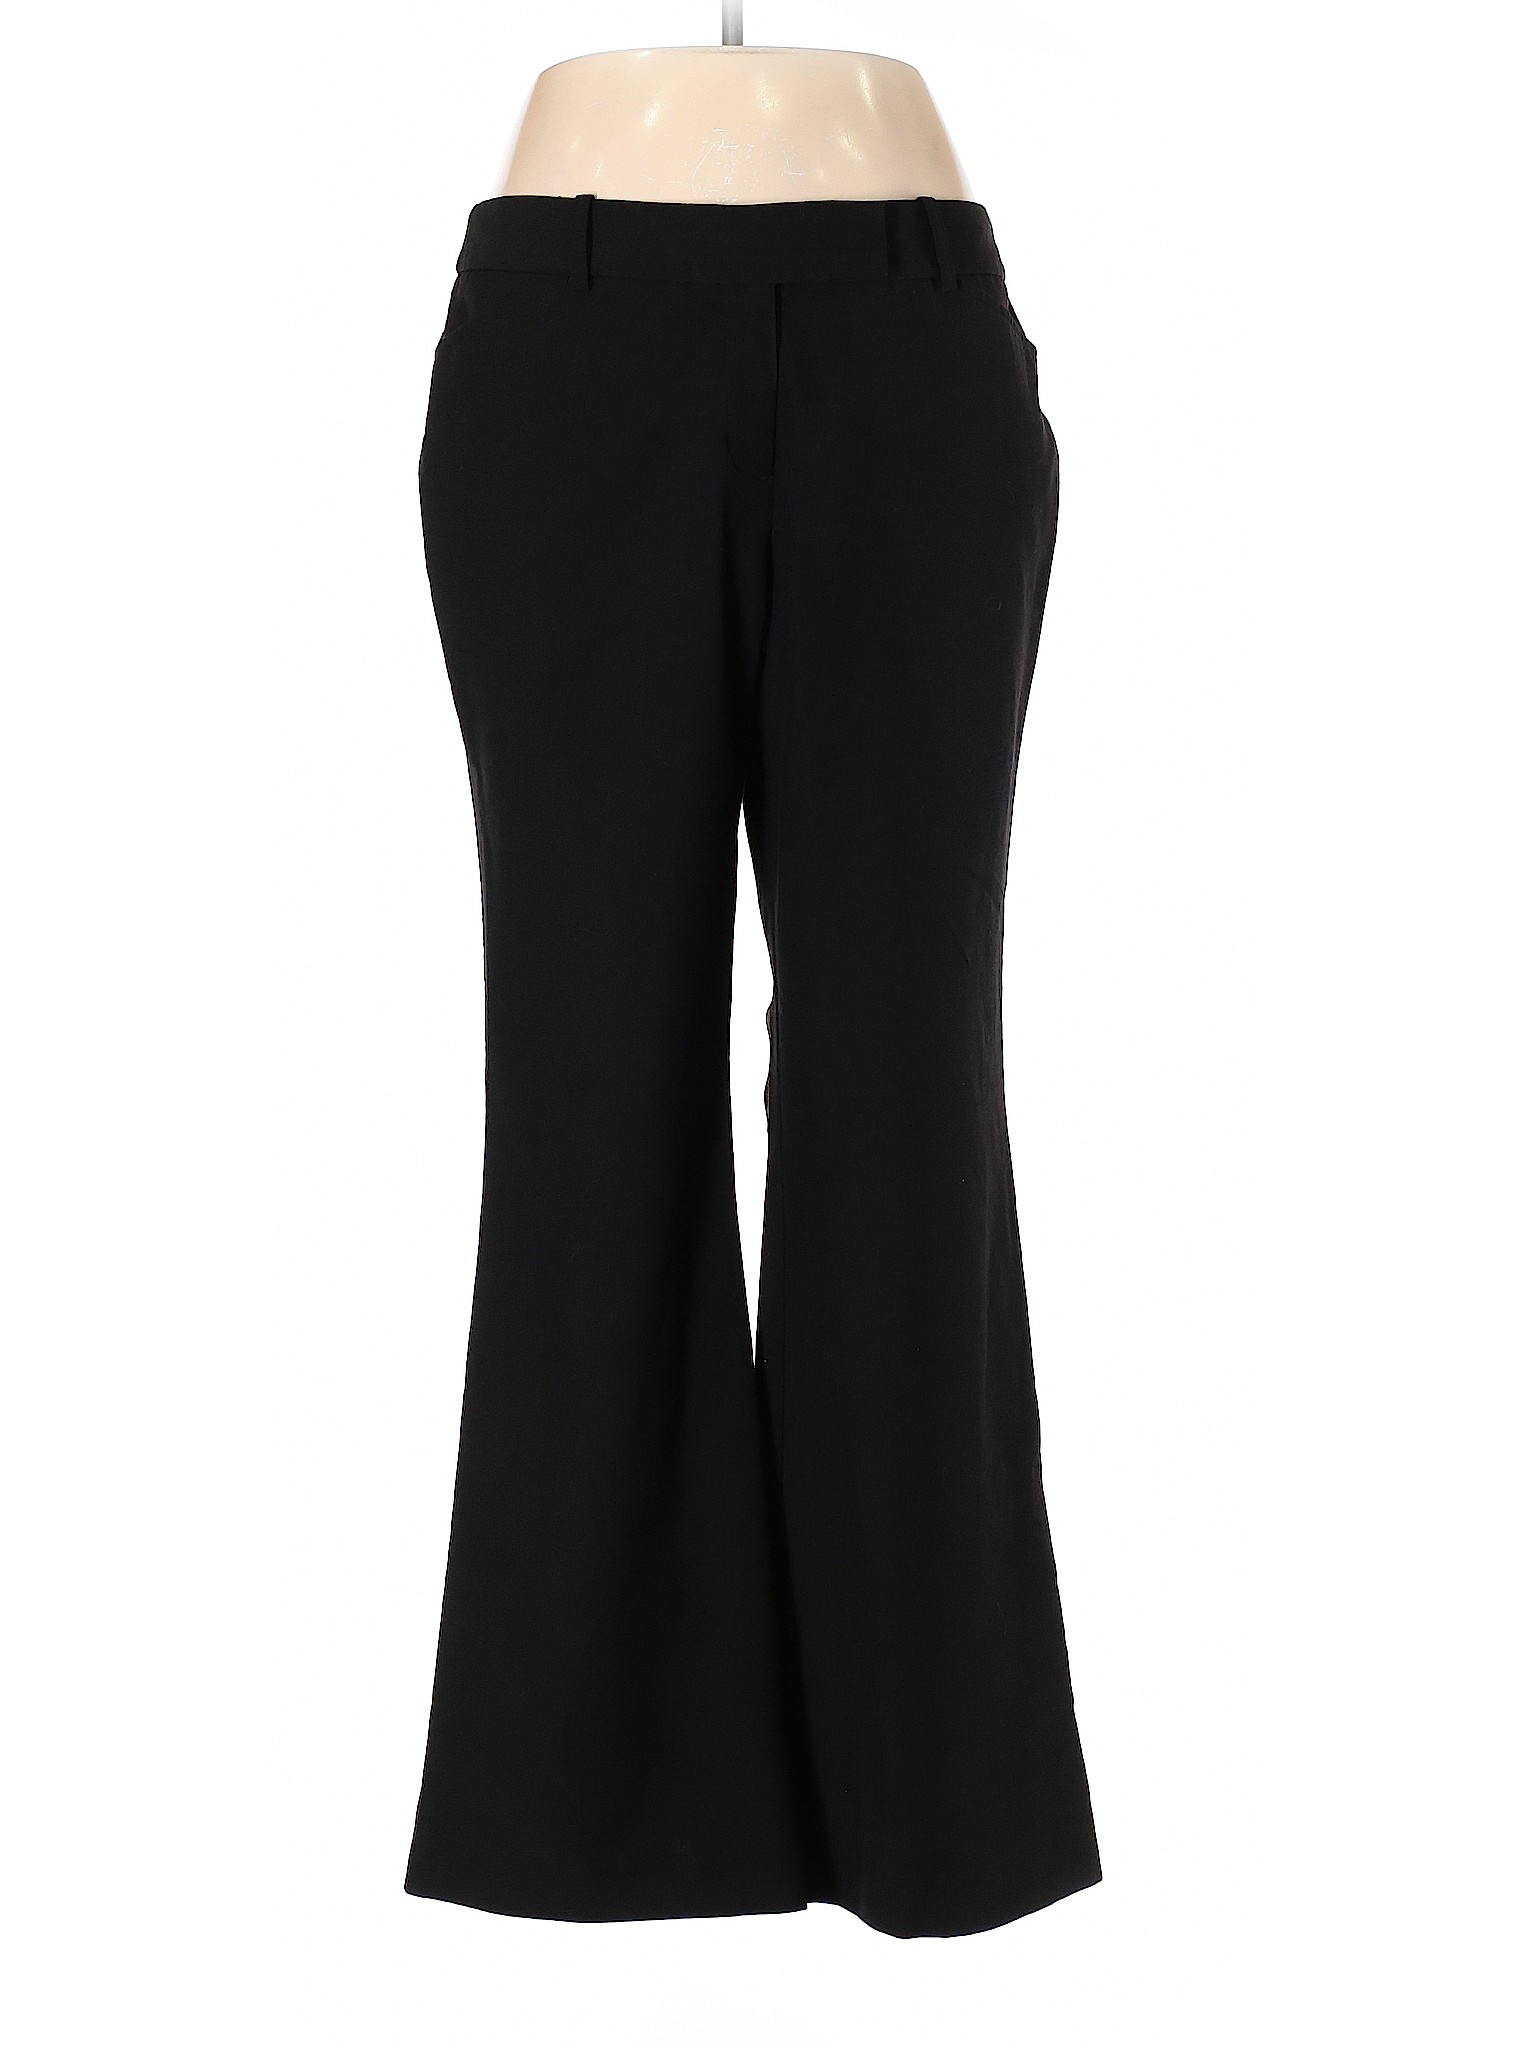 George Women Black Dress Pants 12 Petites | eBay